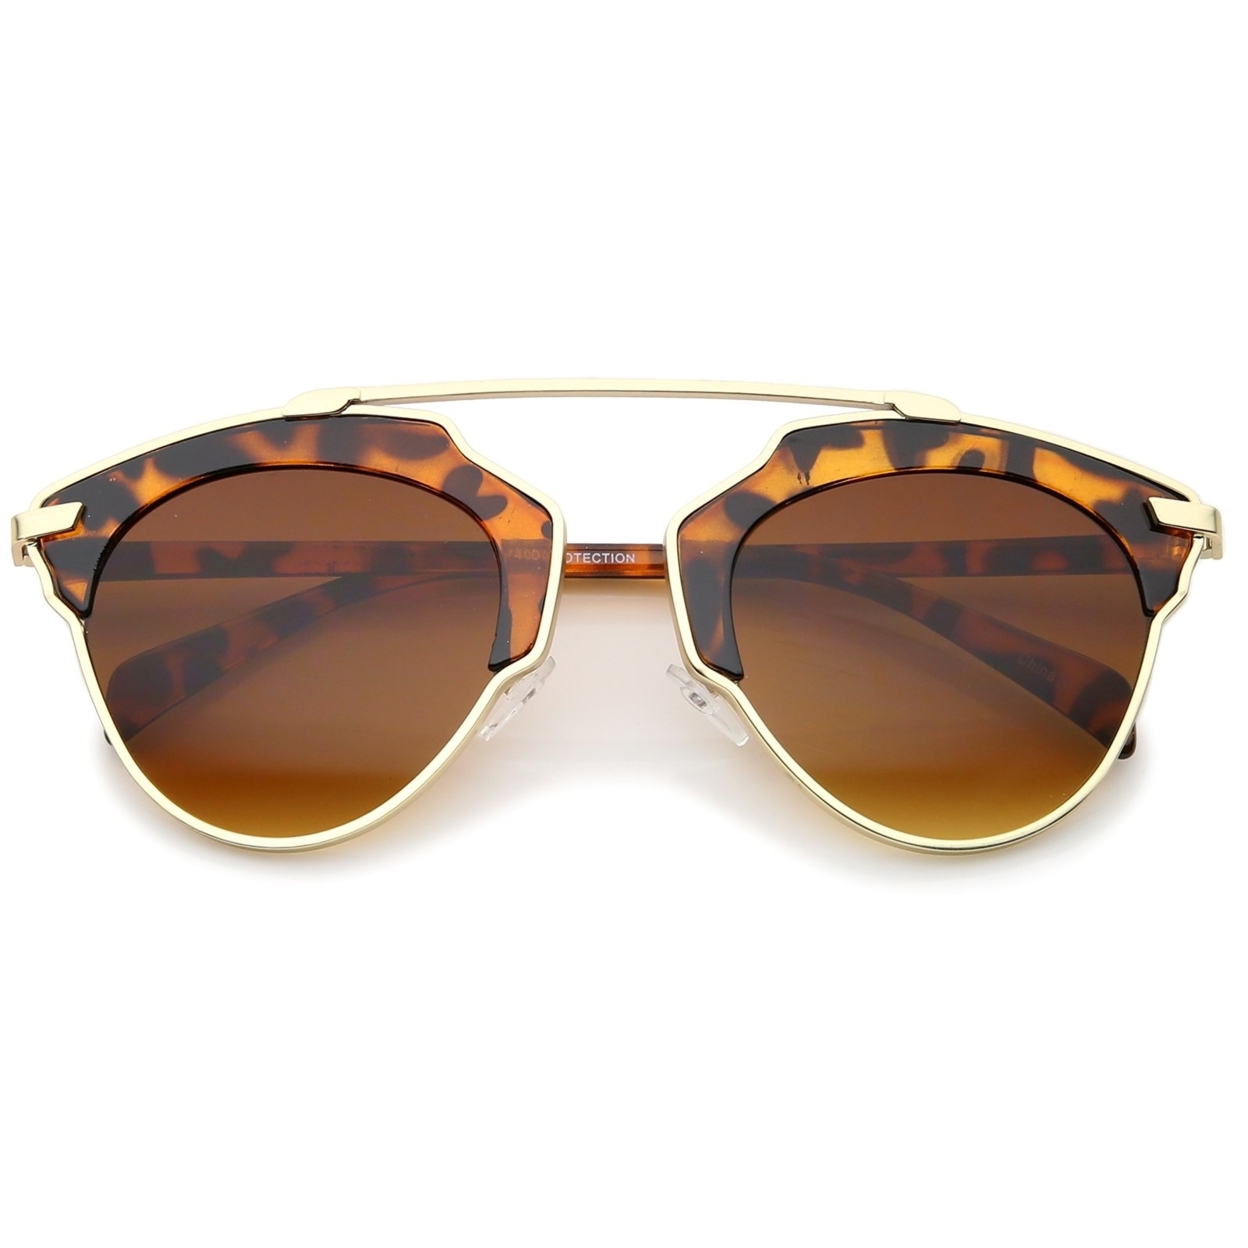 High Fashion Two-Toned Pantos Crossbar Tinted Lens Aviator Sunglasses 52mm - Tortoise-Gold / Amber